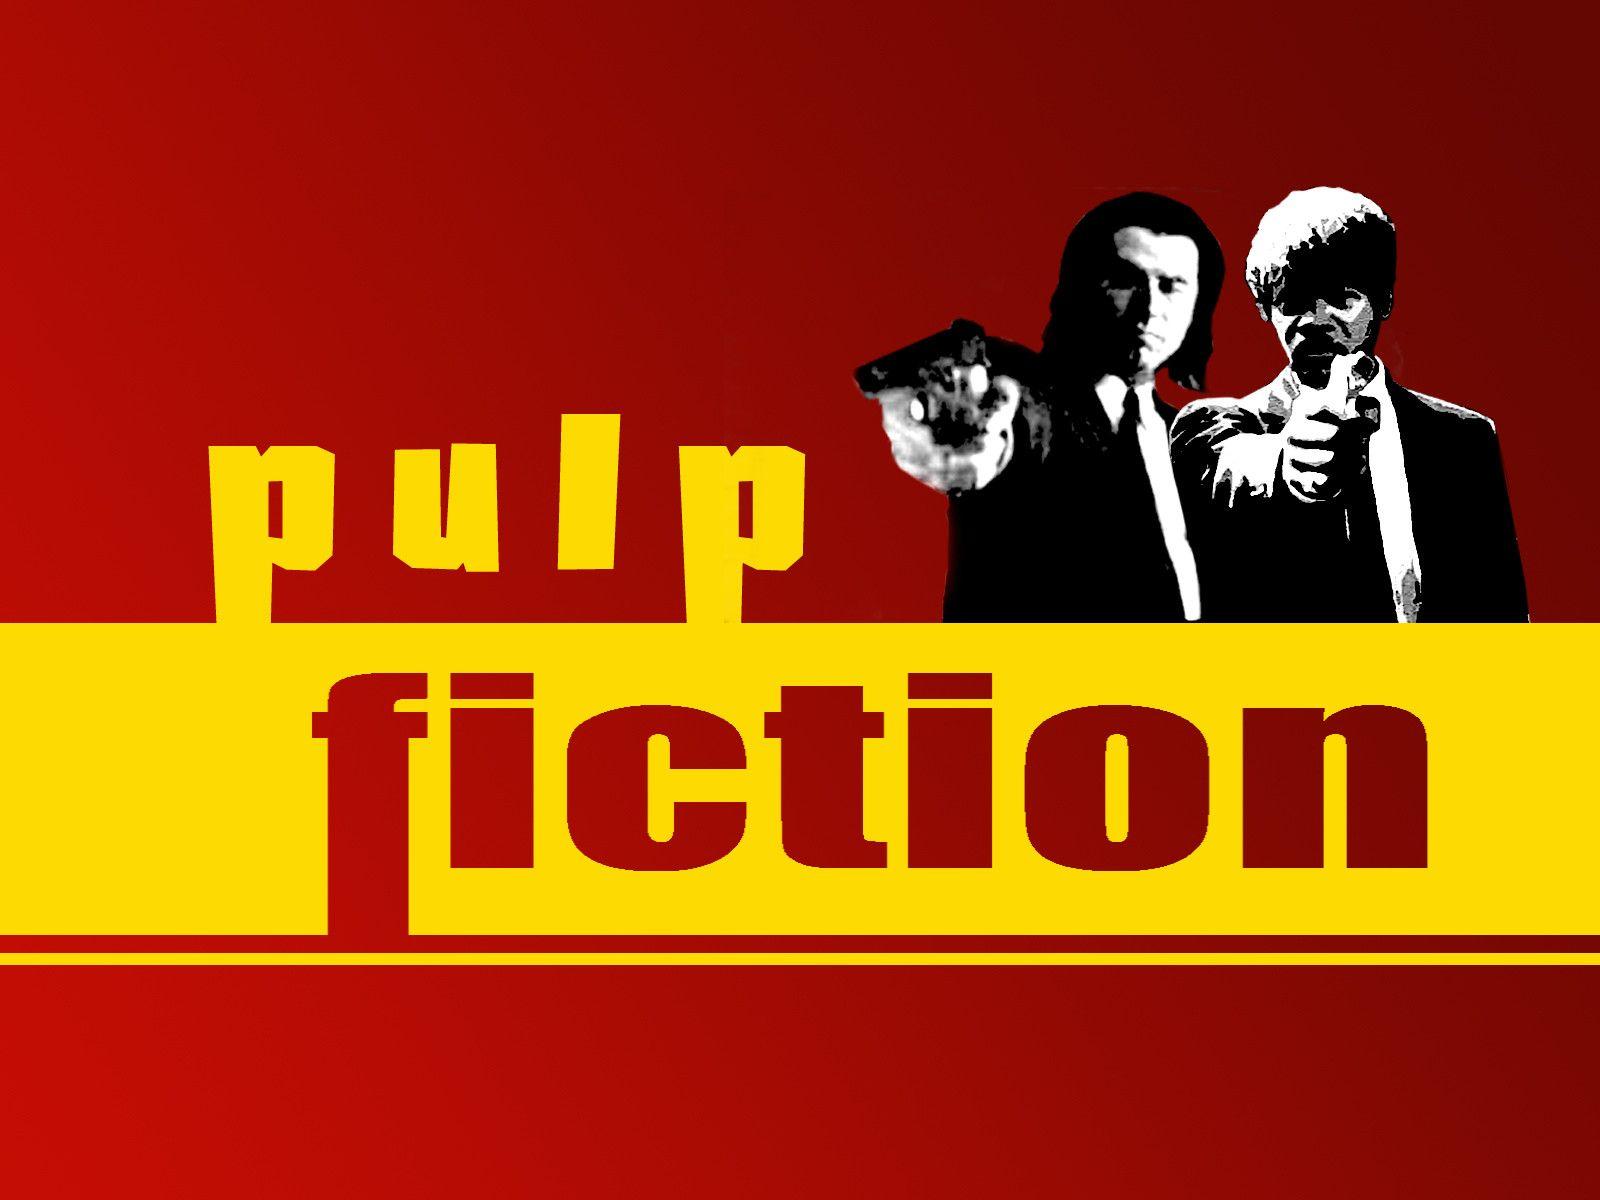 Pulp Fiction Wallpaper. Large HD Wallpaper Database